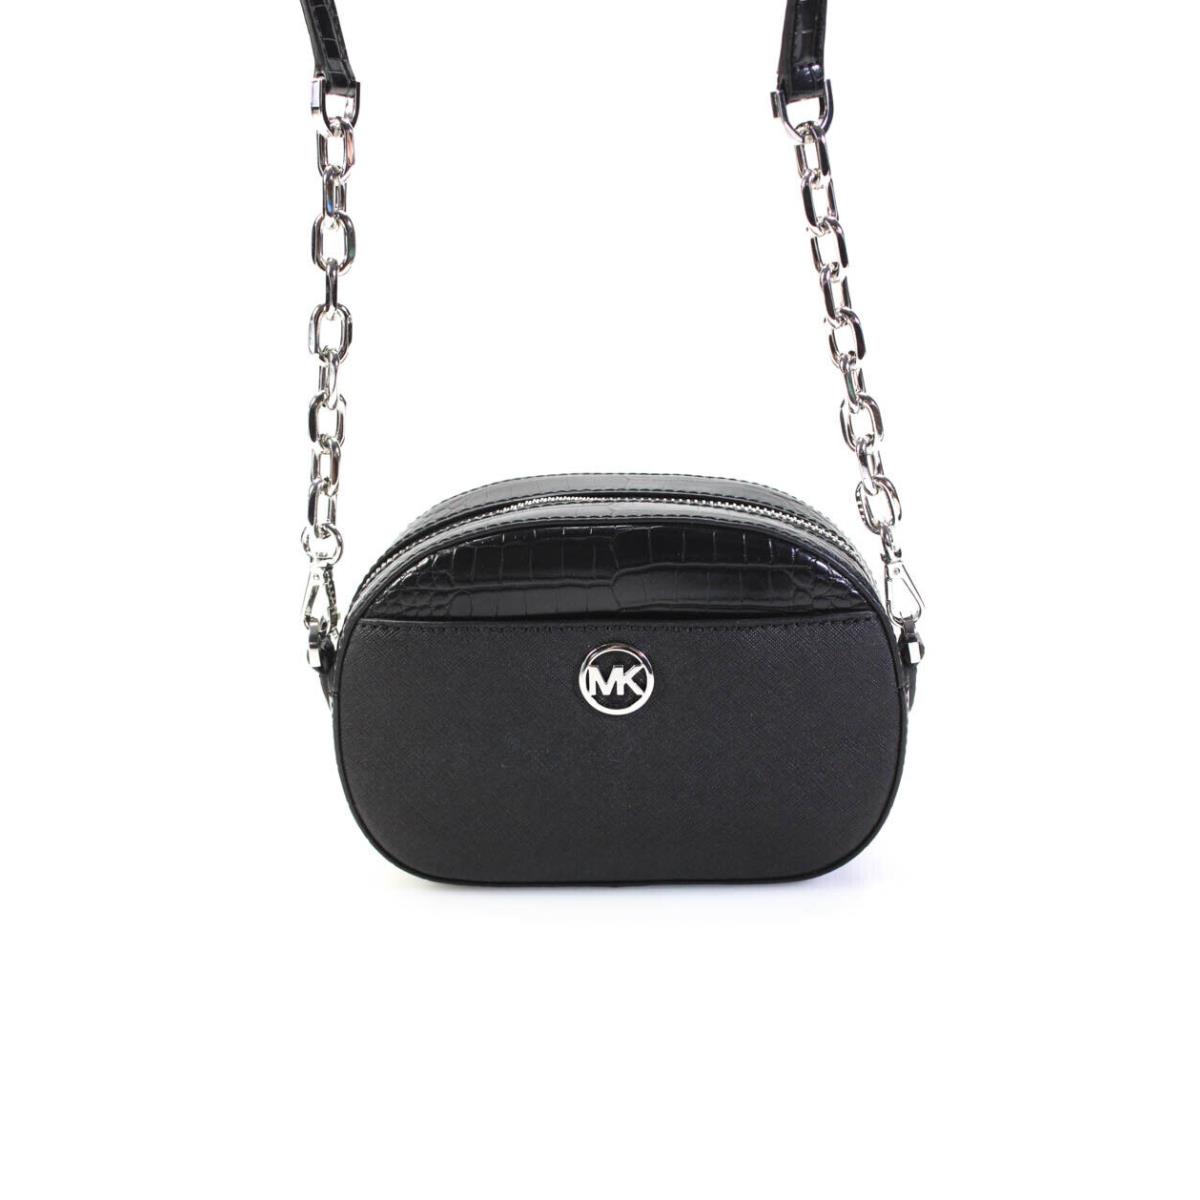 Kors Womens Black Leather Small Front Pocket Crossbody Handbag